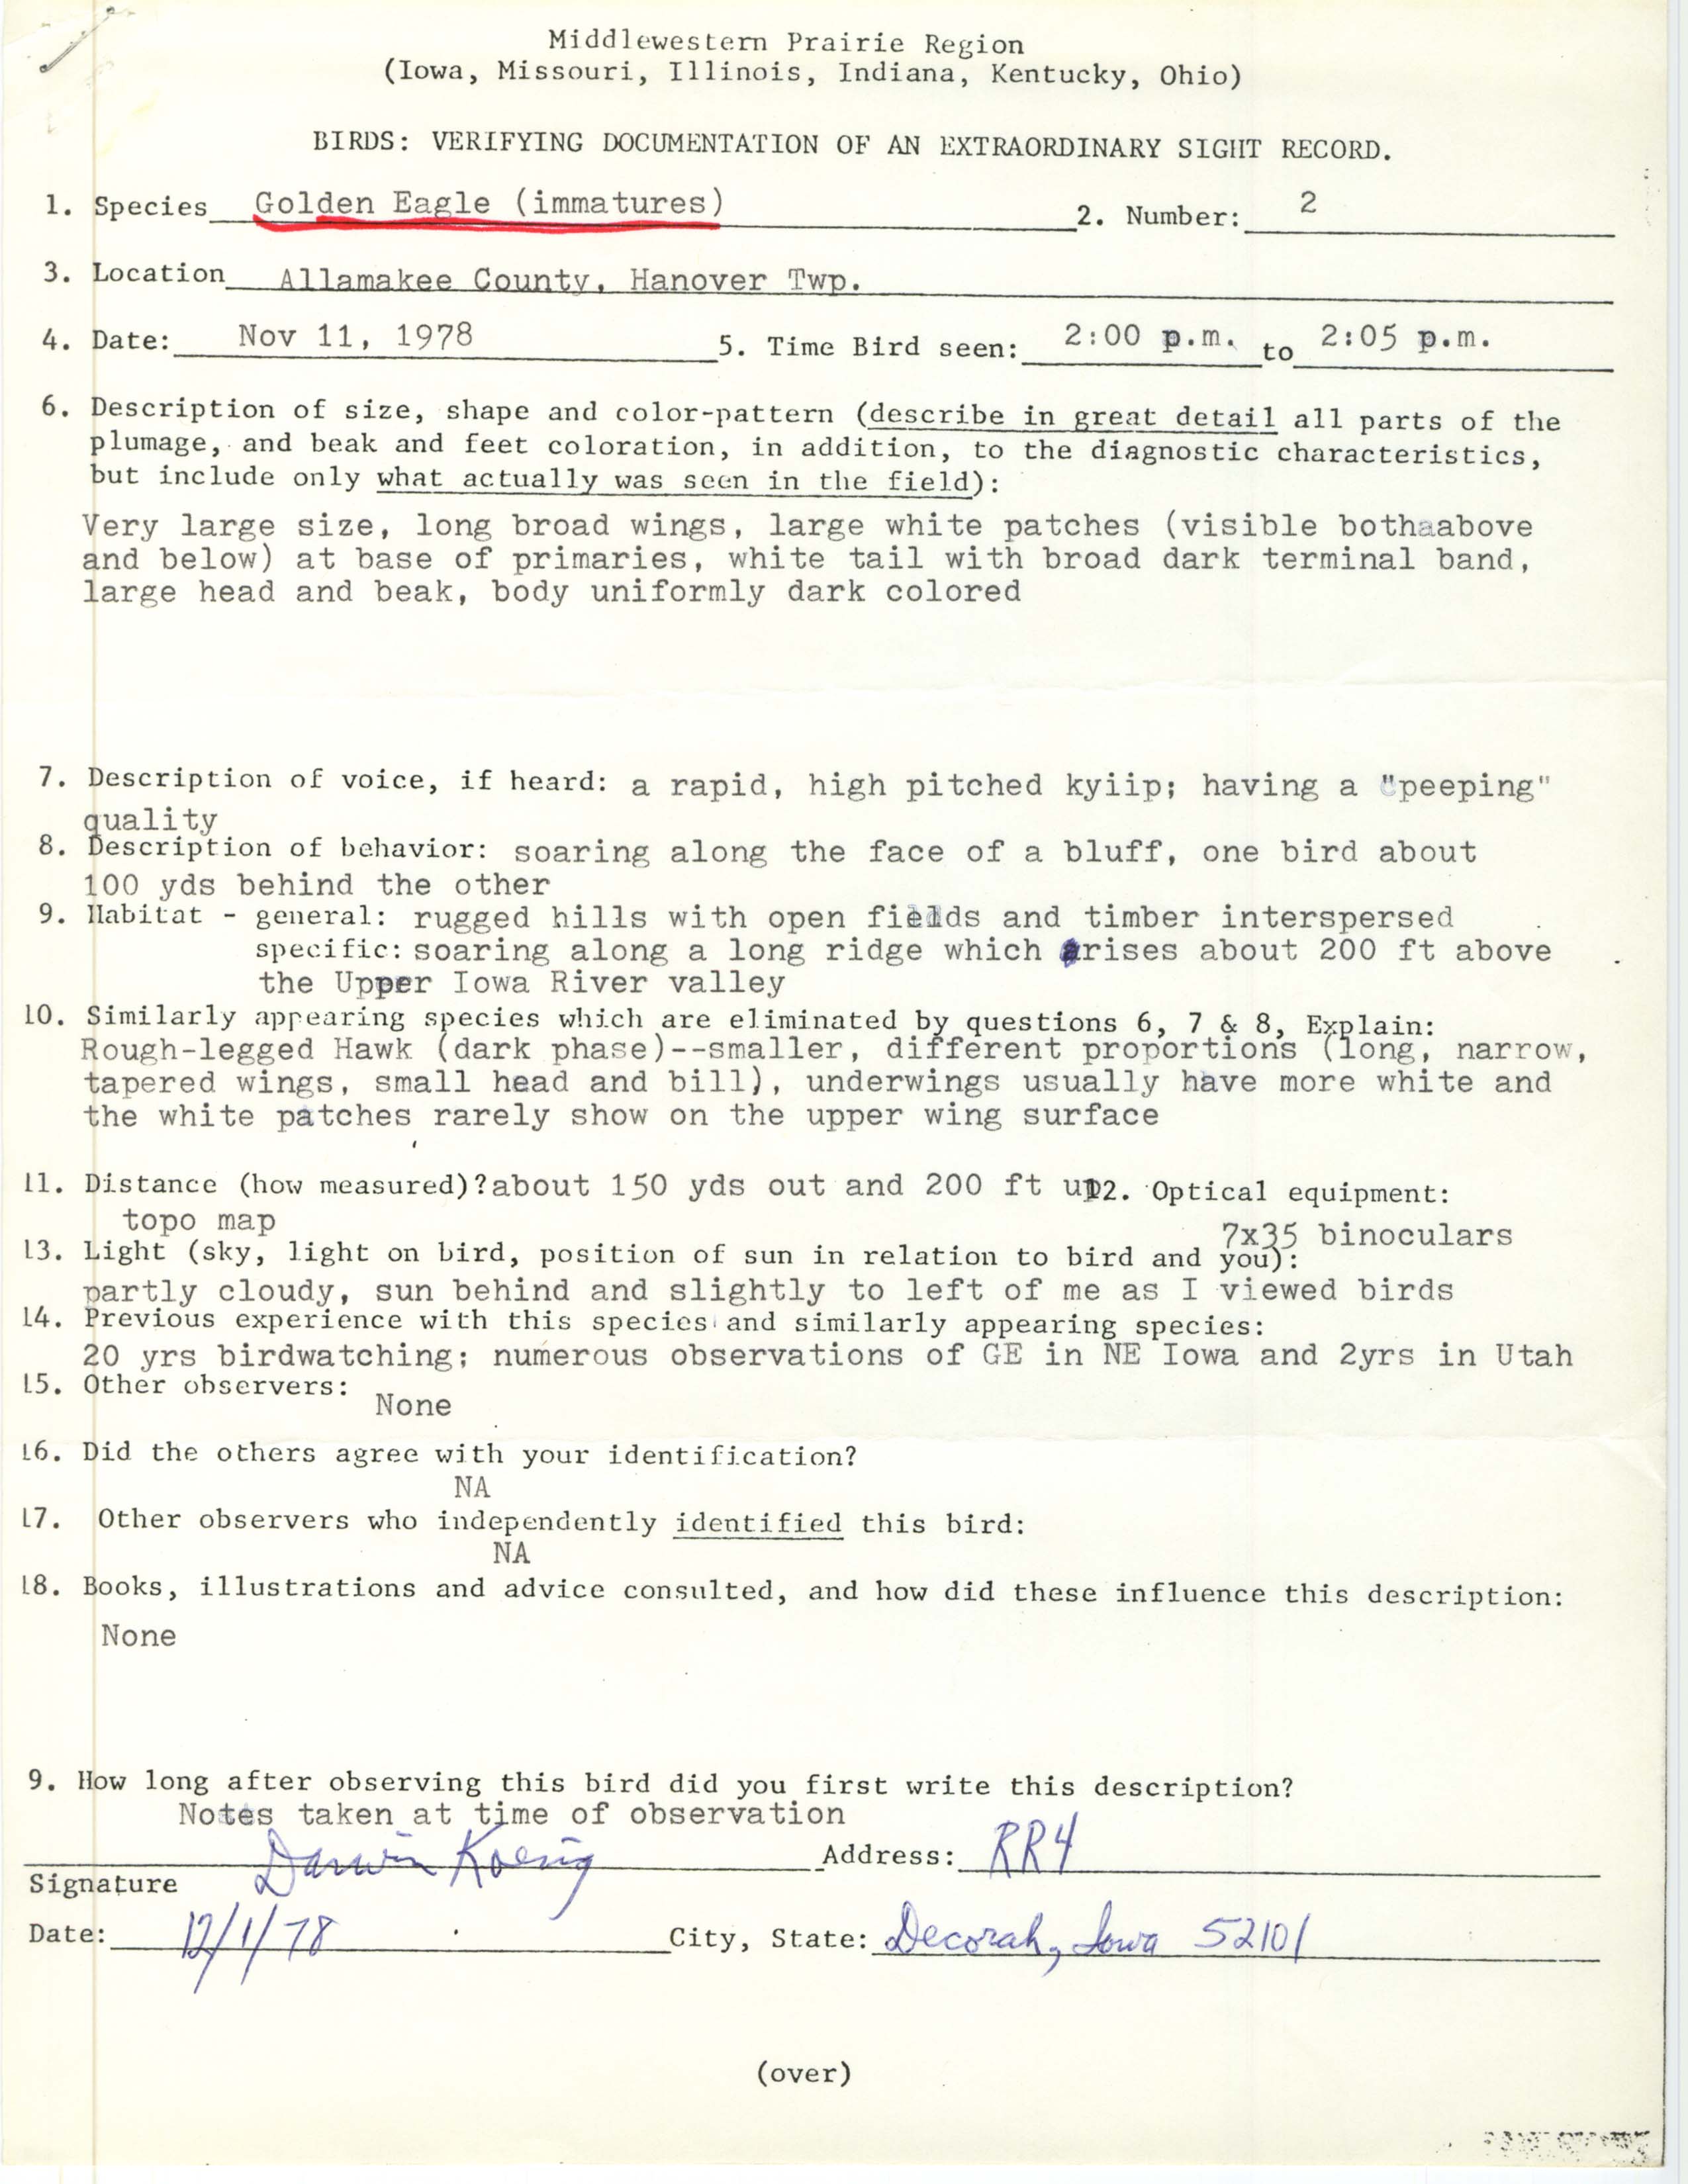 Rare bird documentation form for Golden Eagle at Hanover Township in Allamakee County, 1978